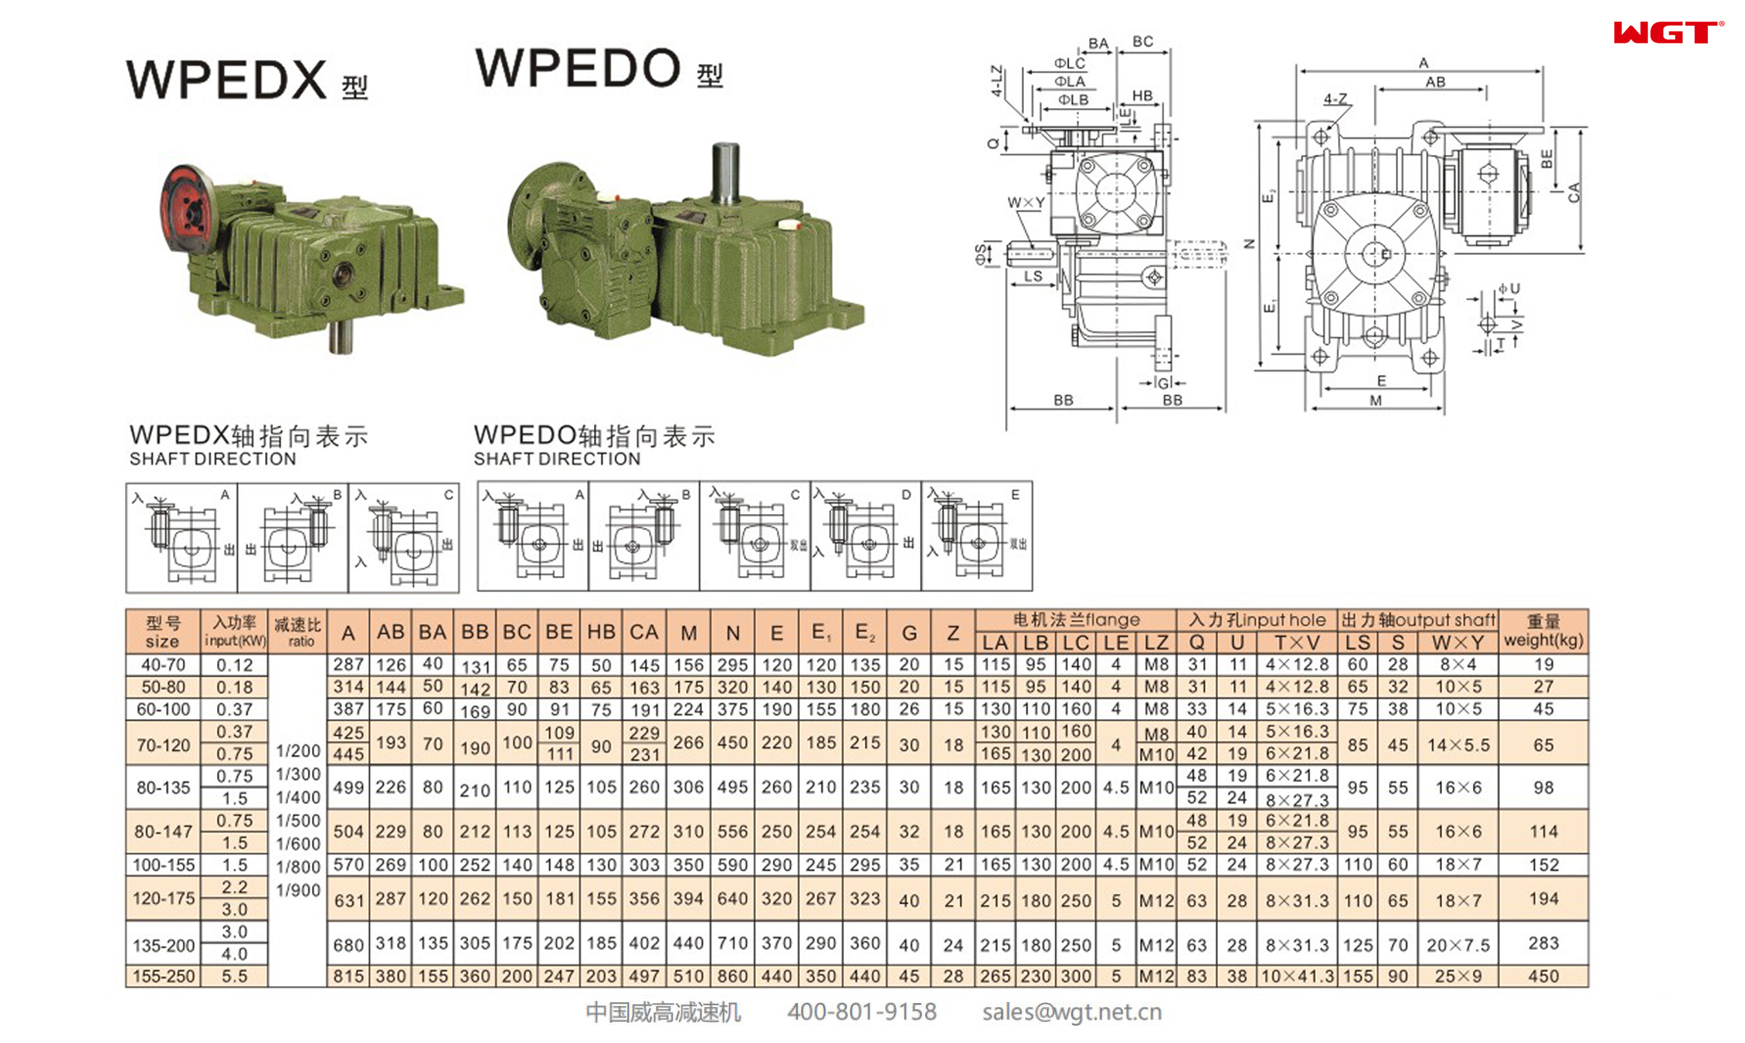 WPEDX WPEDO80-147 Worm Gear Reducer DOUBLE SPEED REDUCER